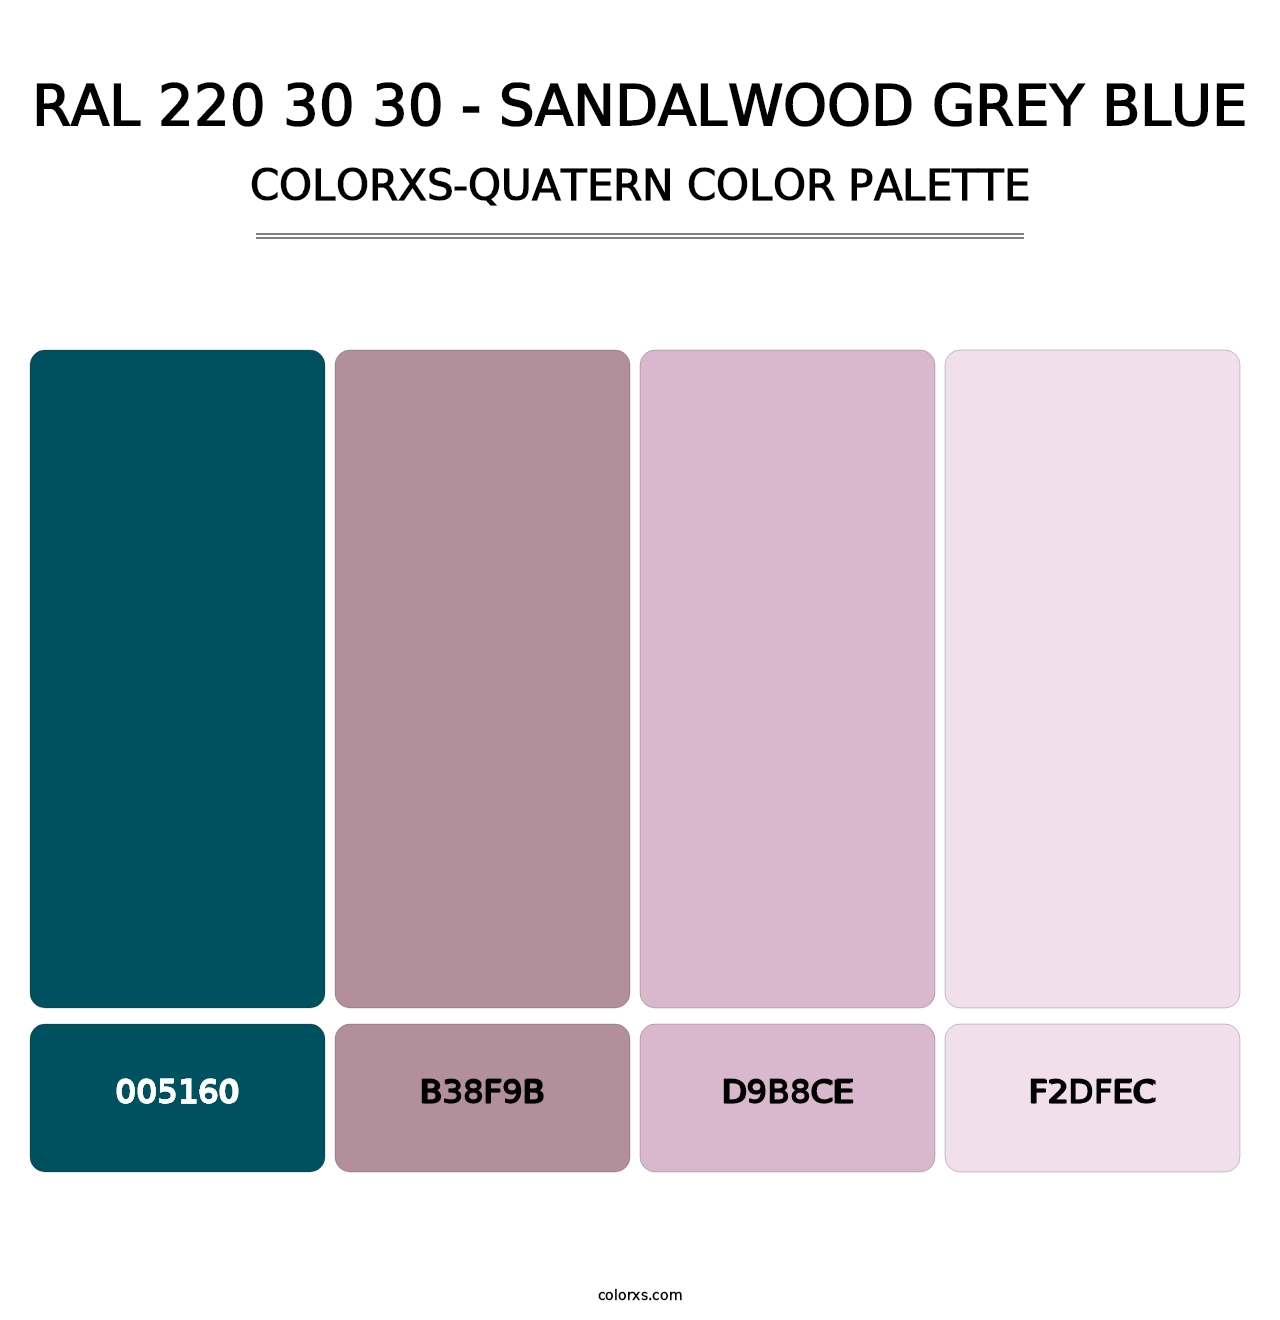 RAL 220 30 30 - Sandalwood Grey Blue - Colorxs Quatern Palette